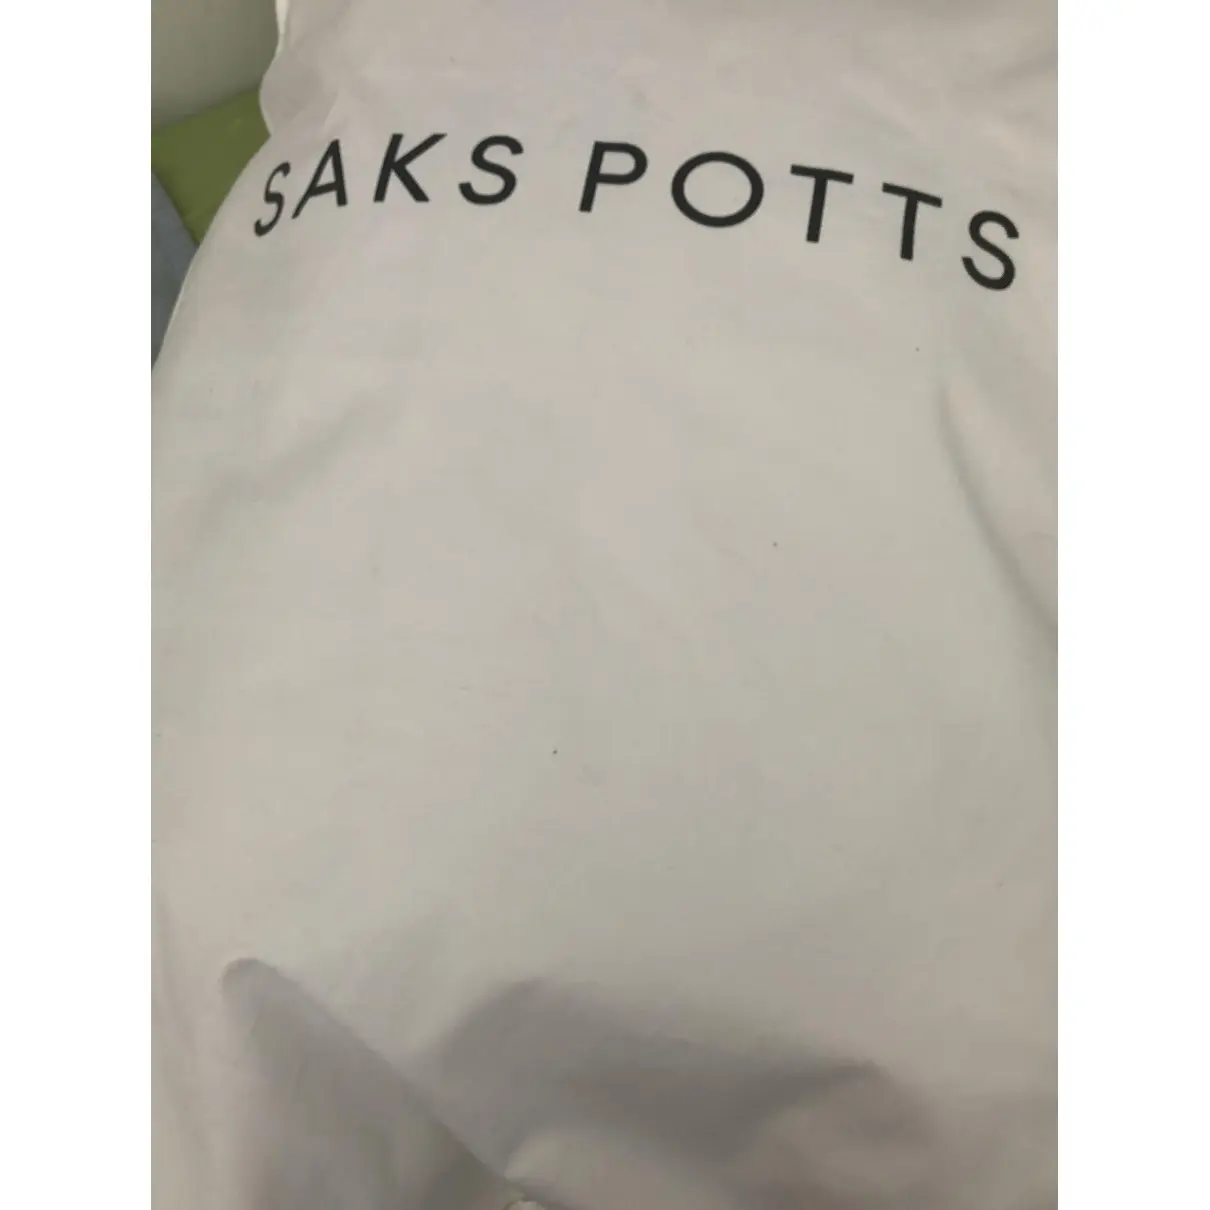 Buy Saks Potts Puffer online